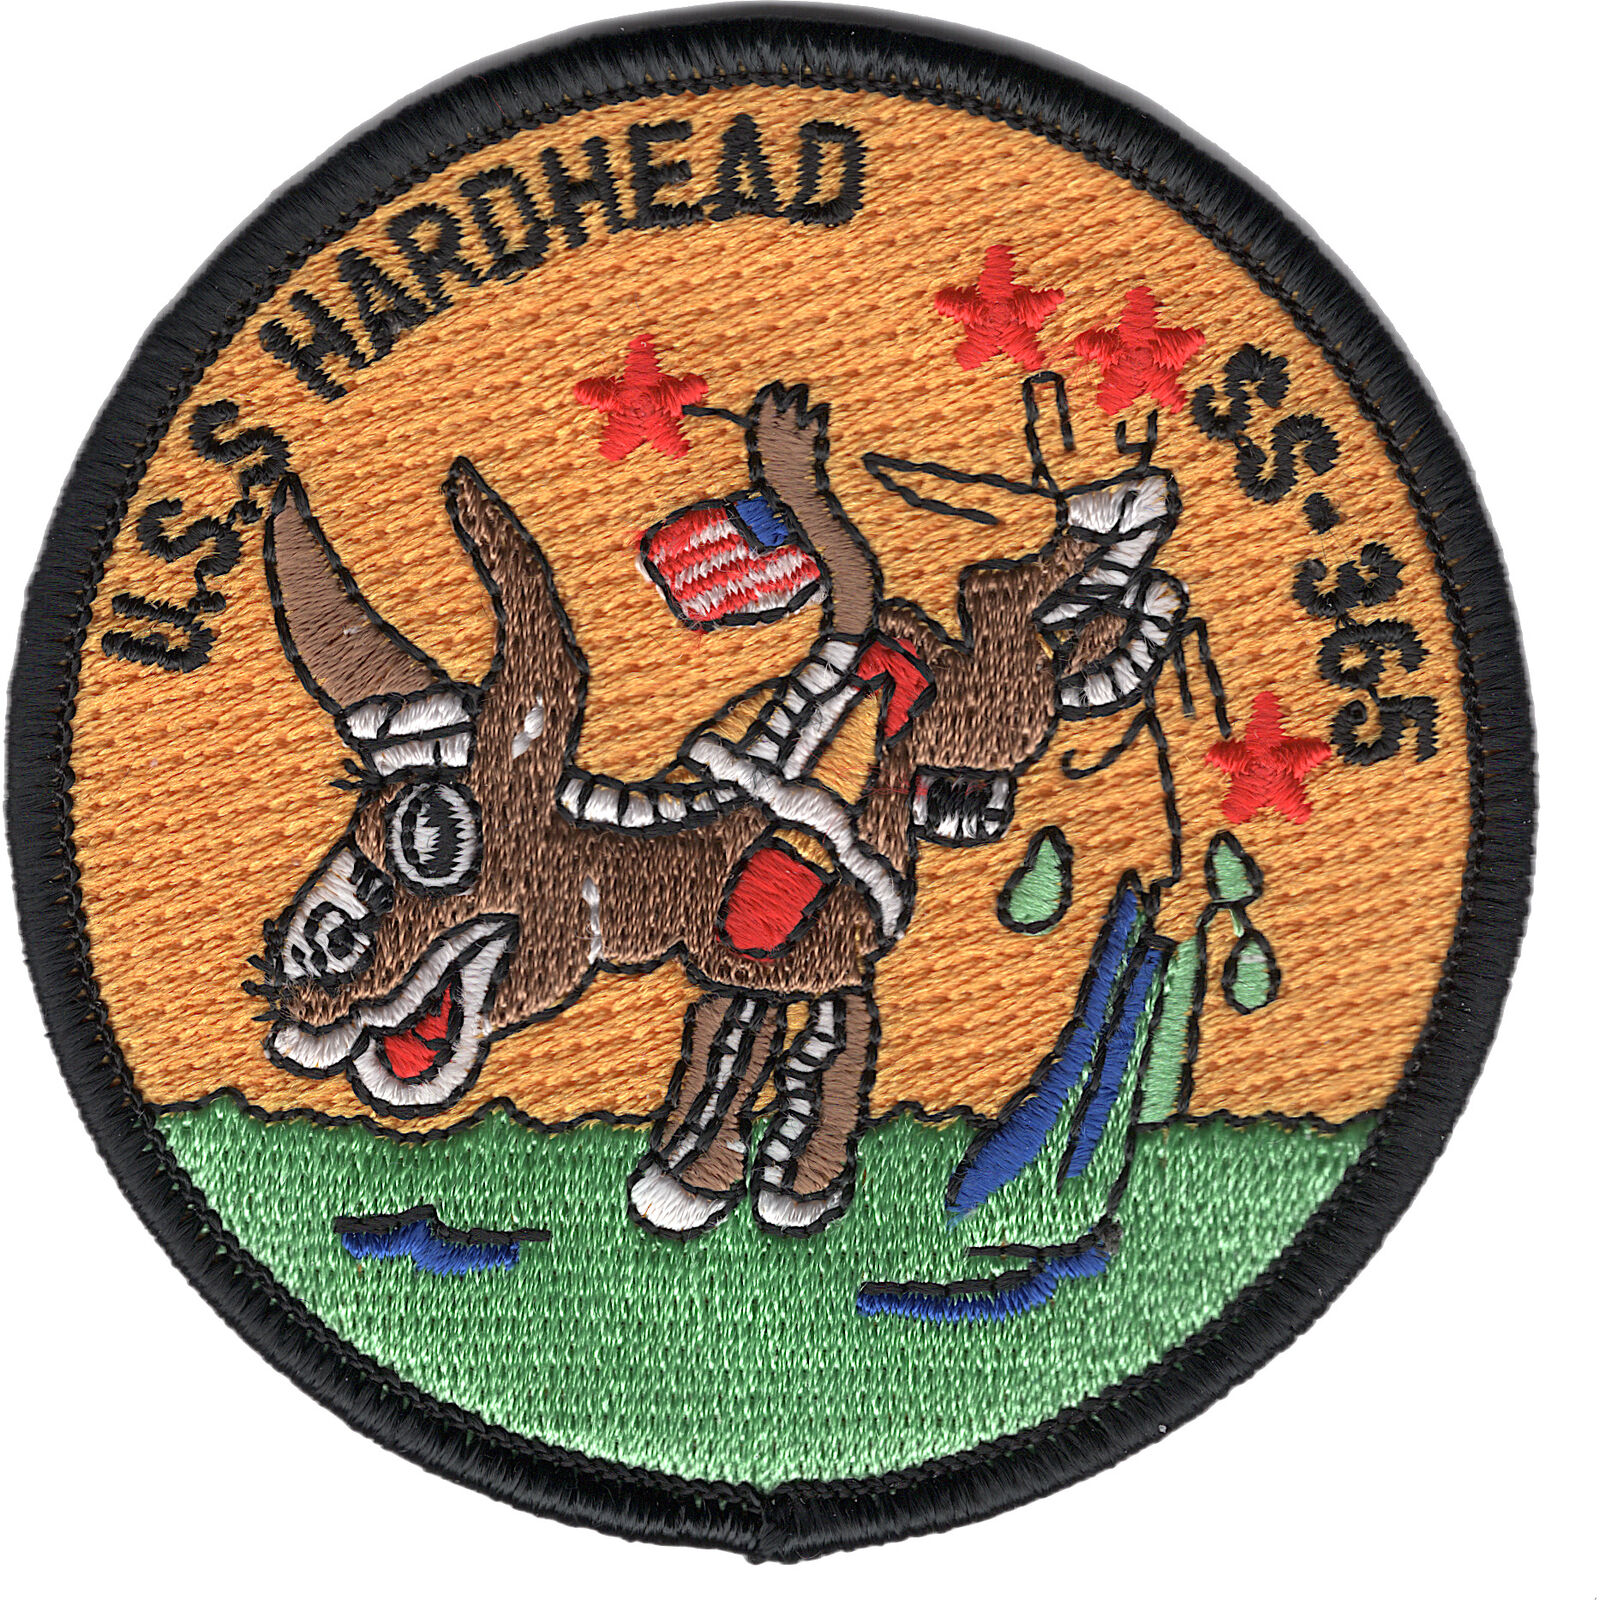 SS-365 USS Hardhead Patch - Small